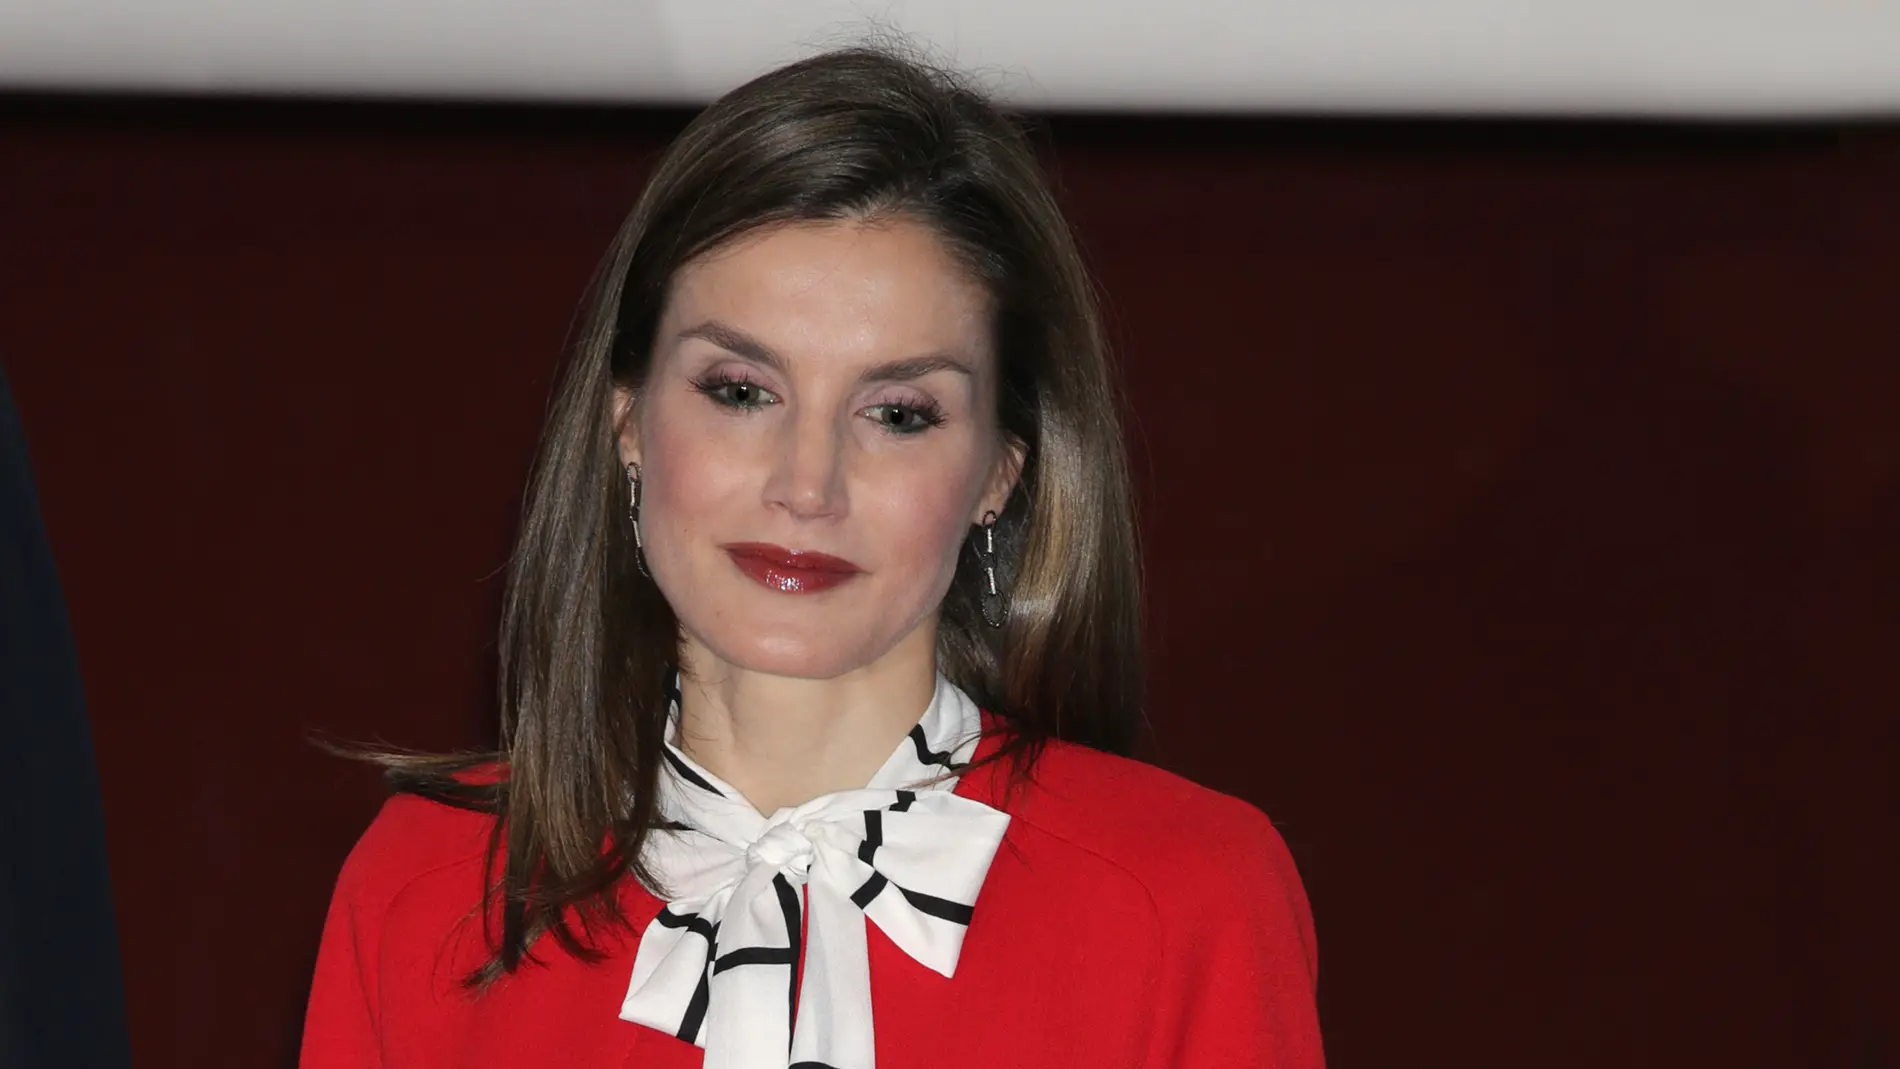 La reina Letizia con el abrigo rojo de Zara